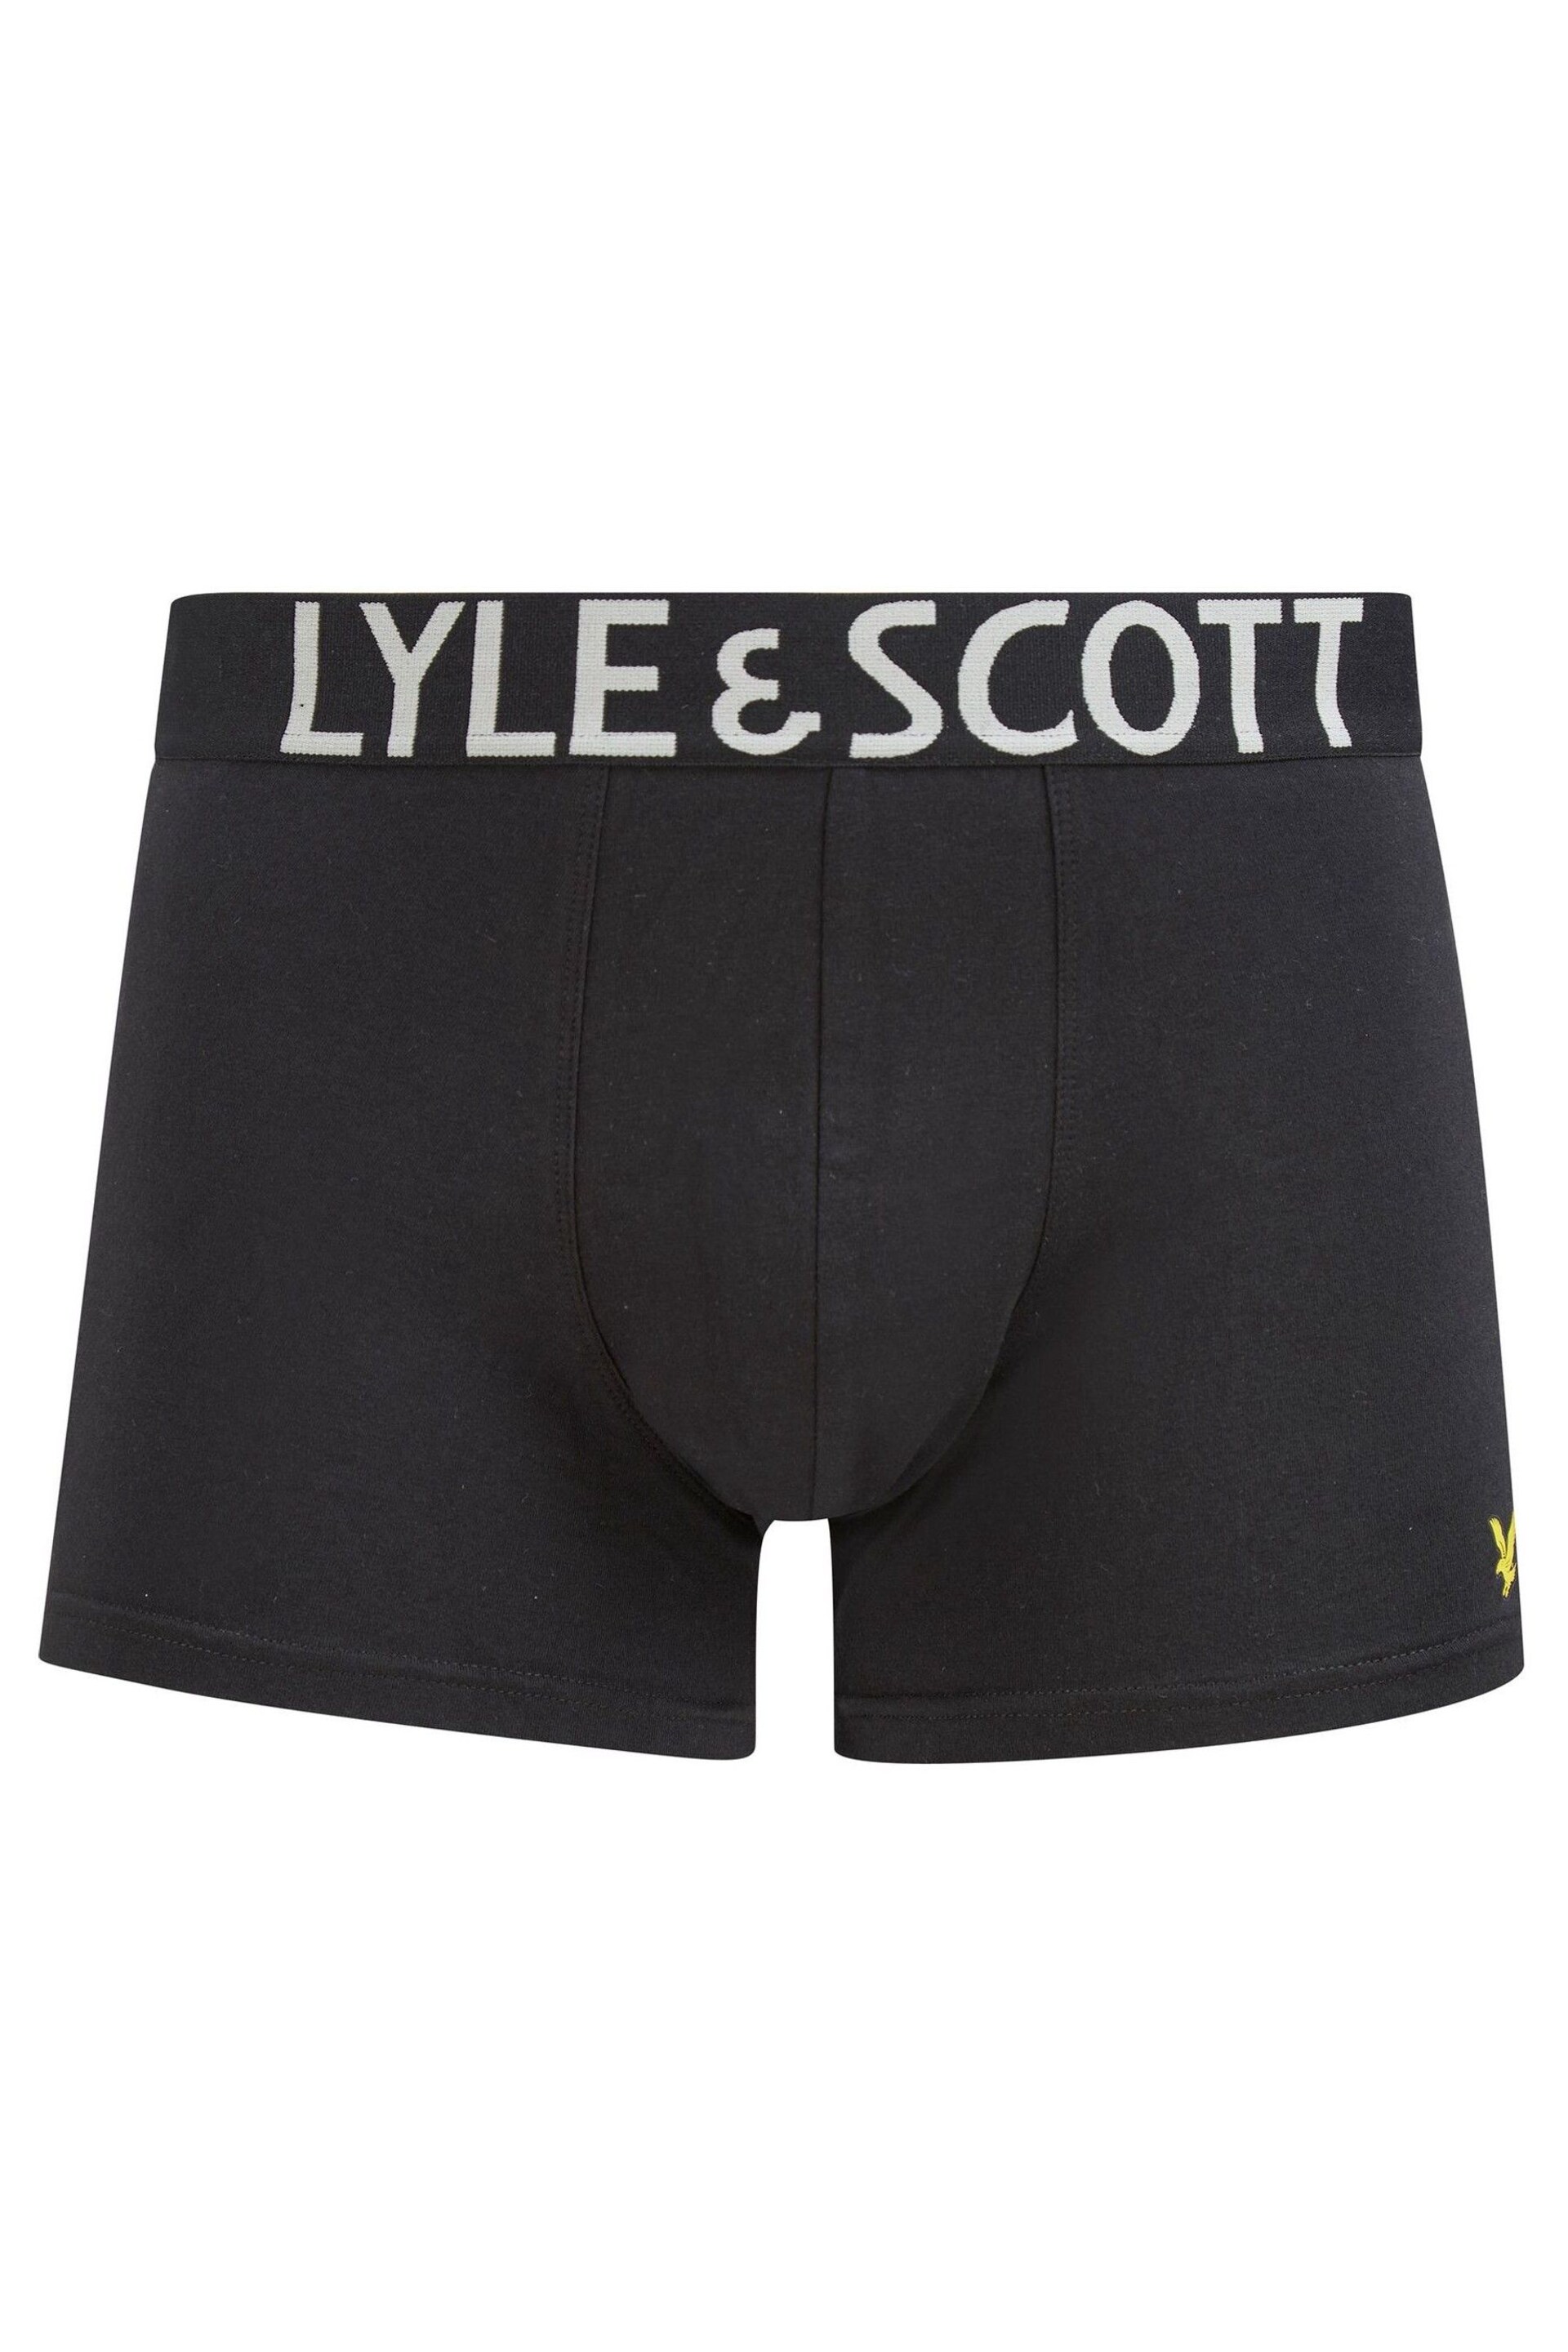 Lyle And Scott Black Daniel Premium Underwear Trunks 3 Pack - Image 2 of 3